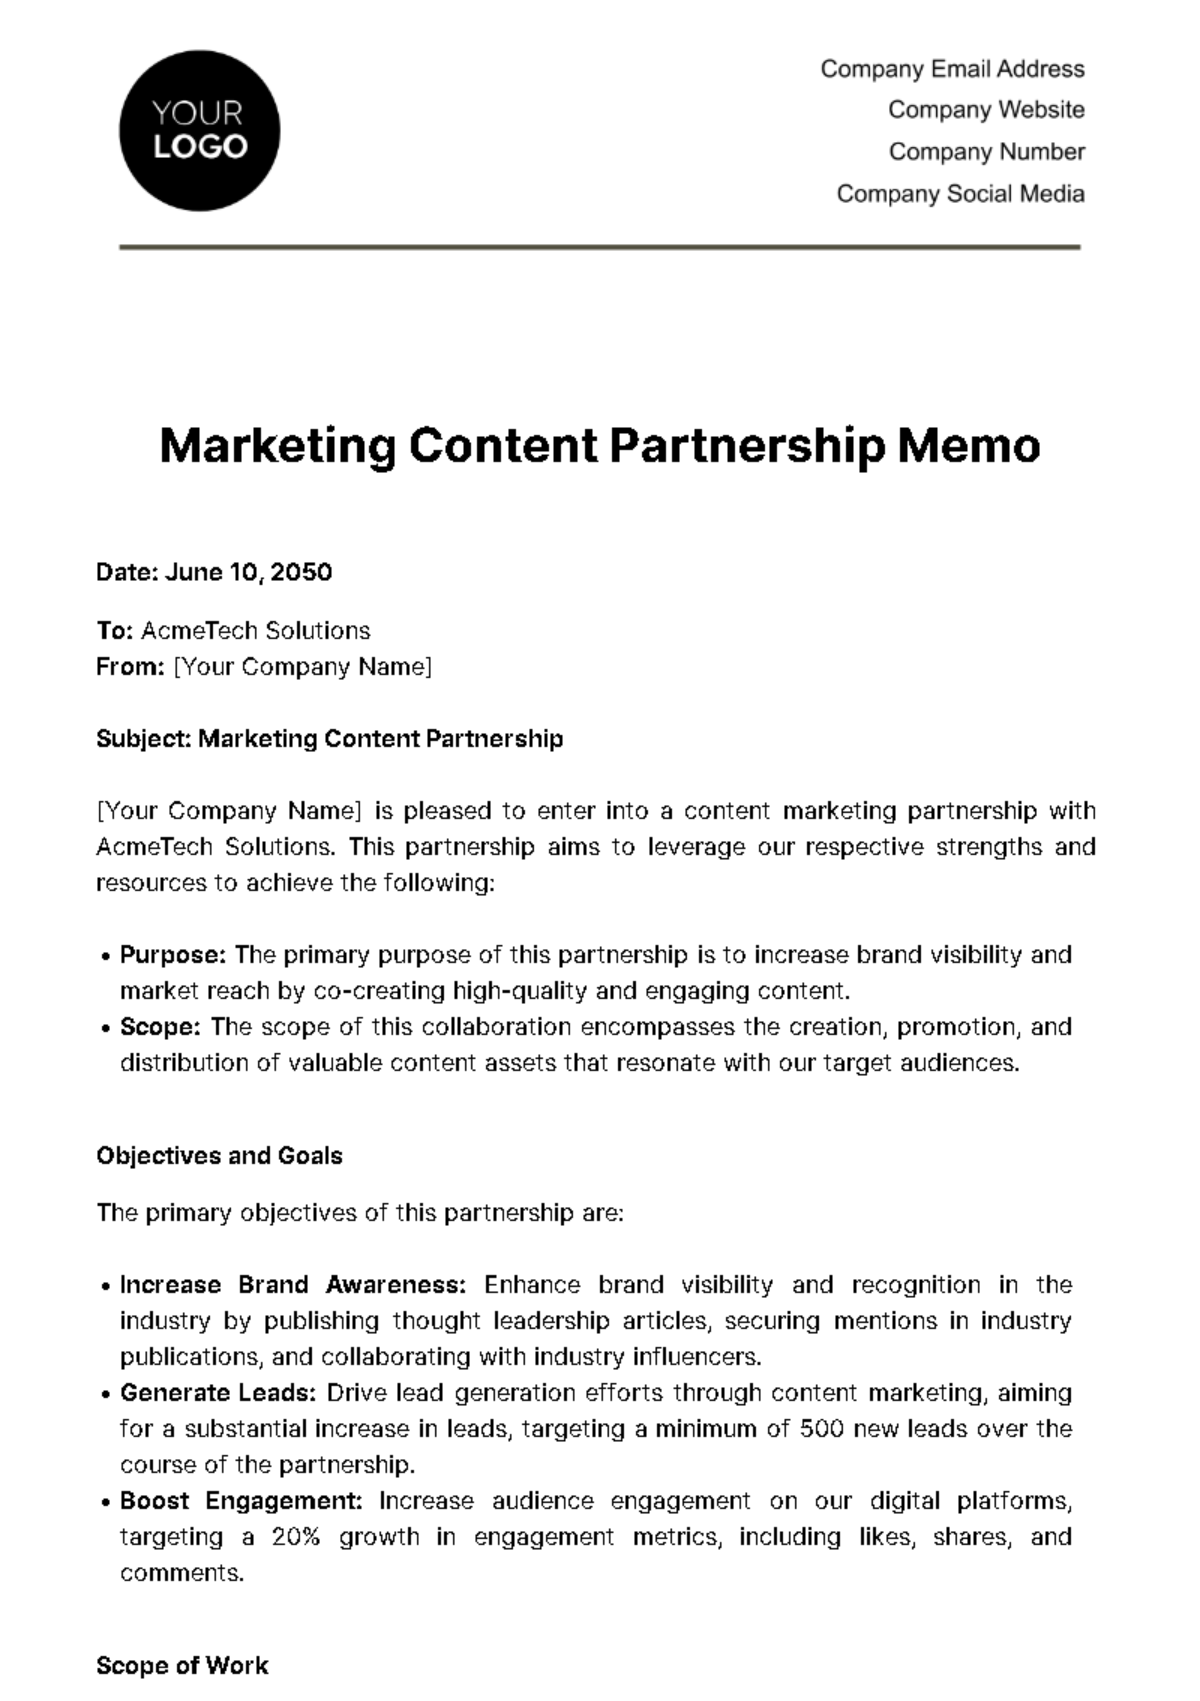 Marketing Content Partnership Memo Template